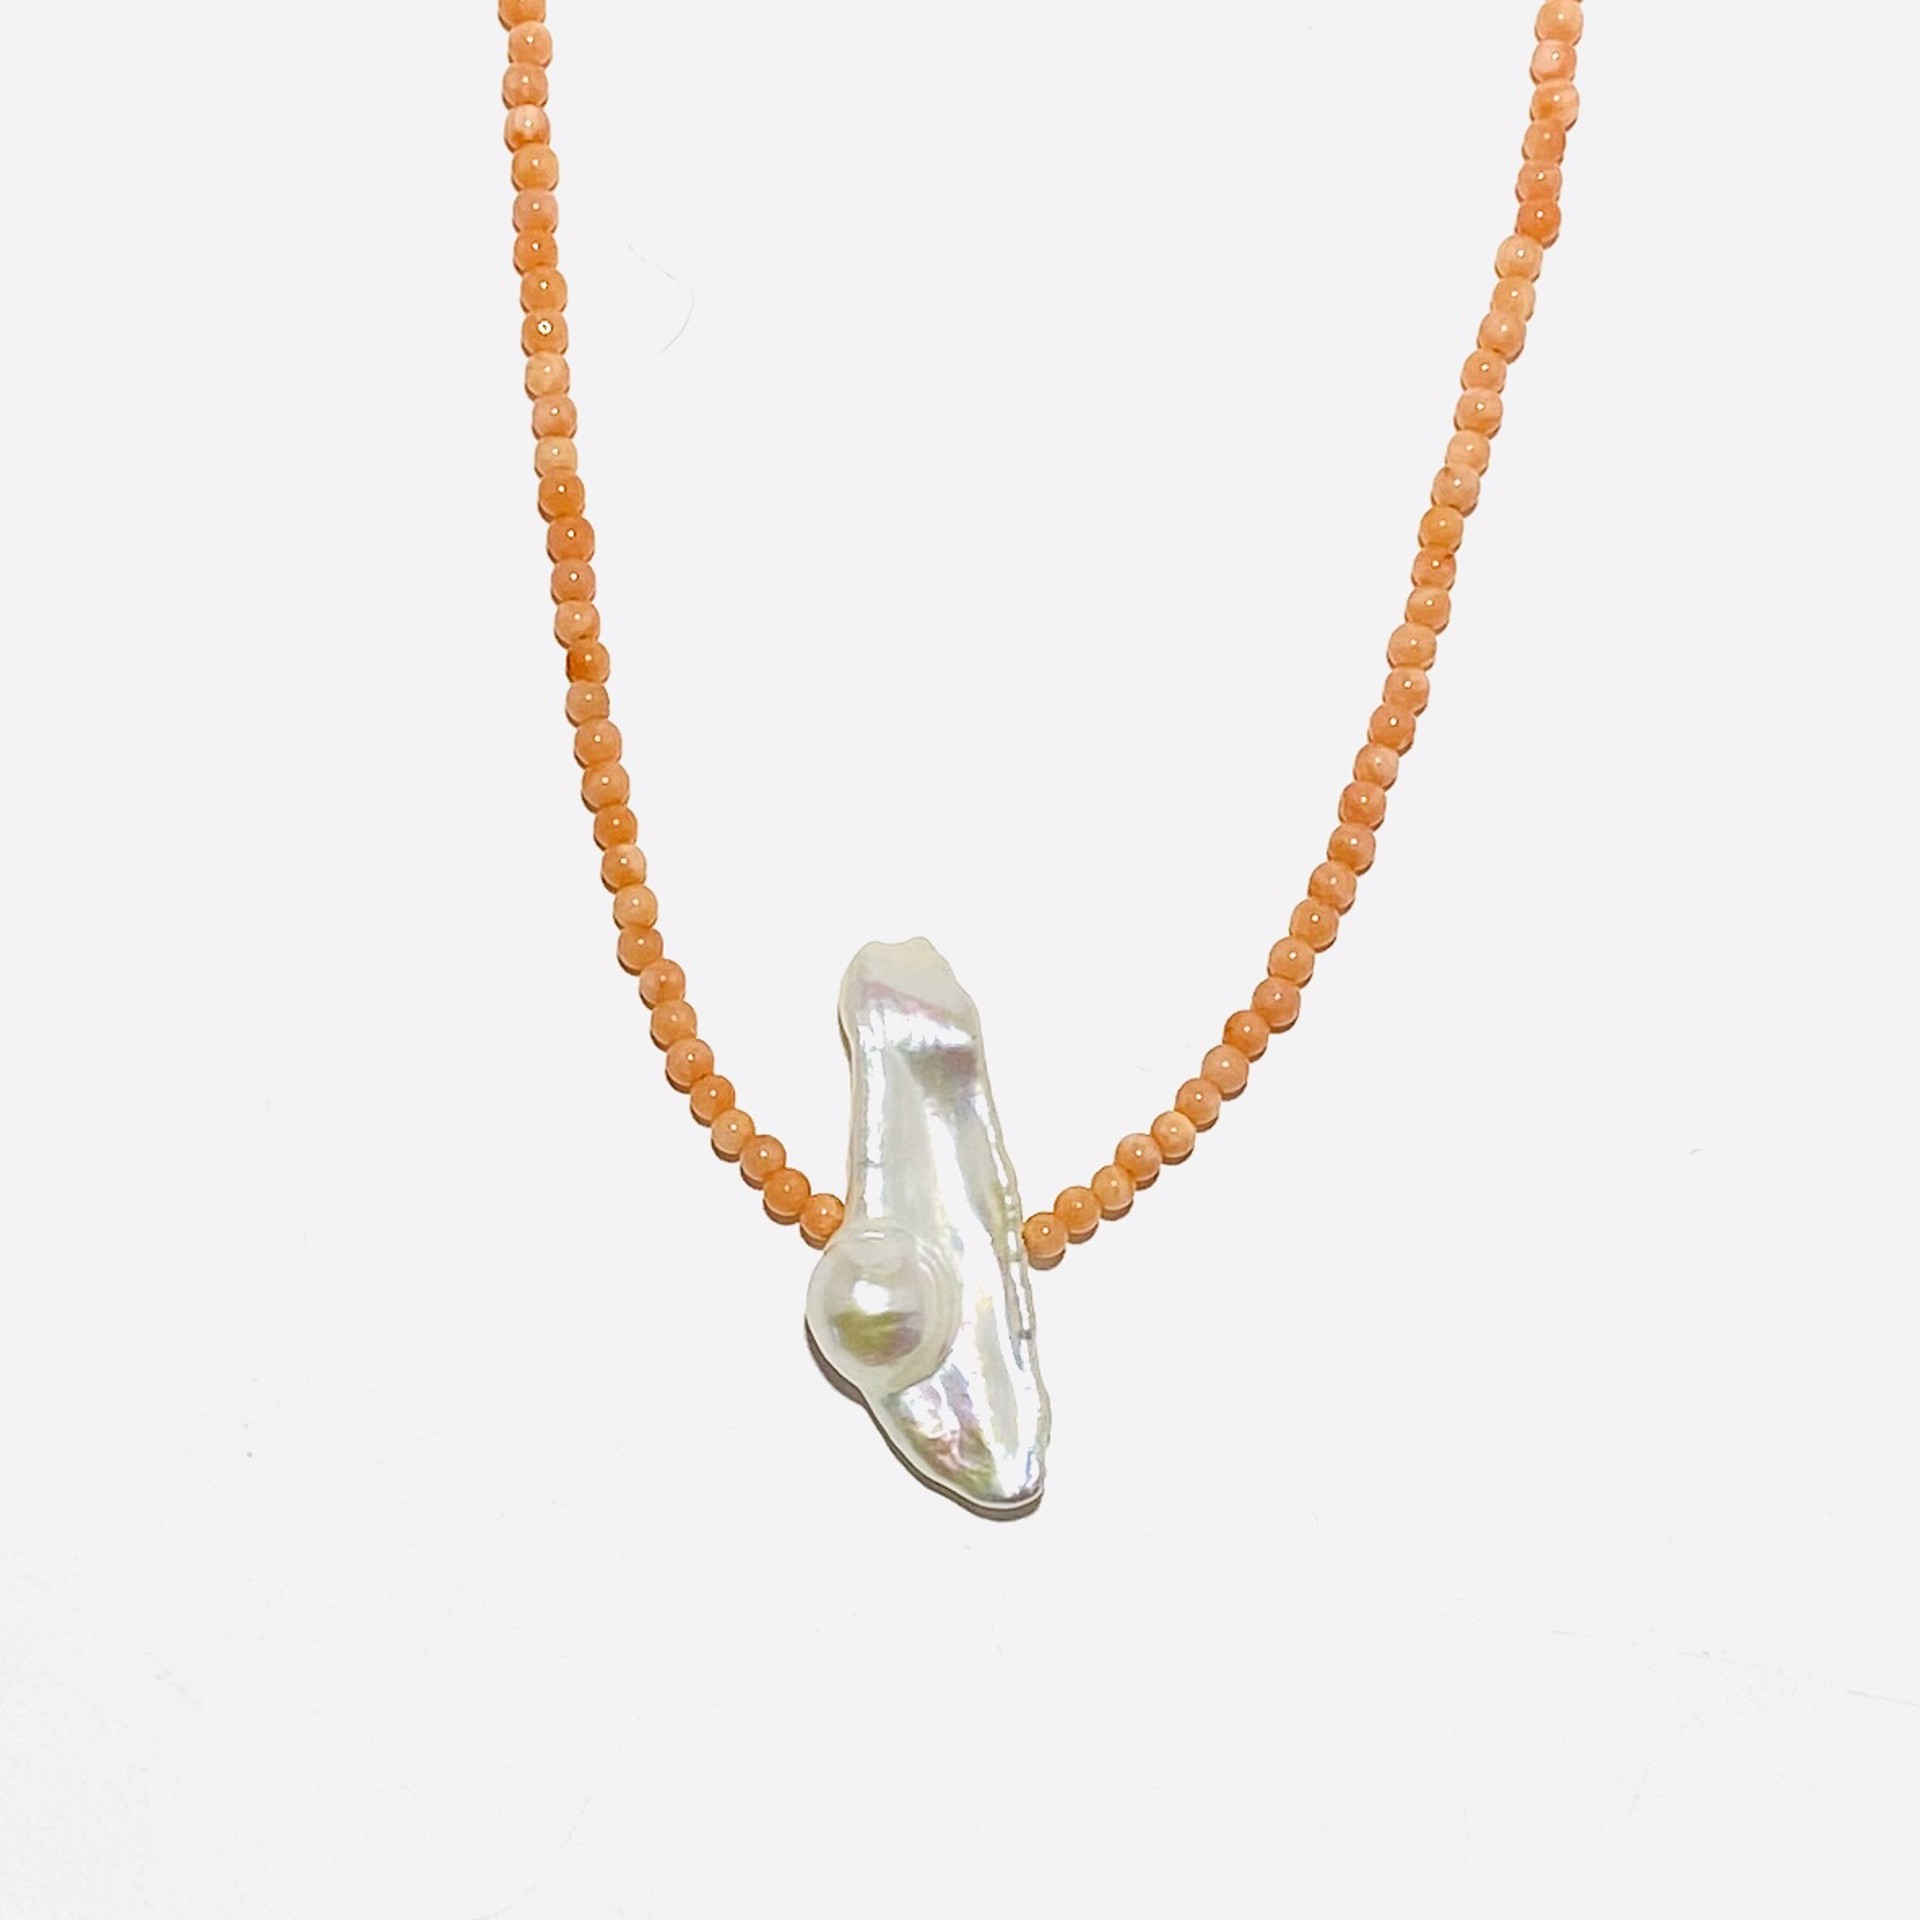 Tiny Coral Bead, Large Biwa Pearl Necklace by Nance Trueworthy